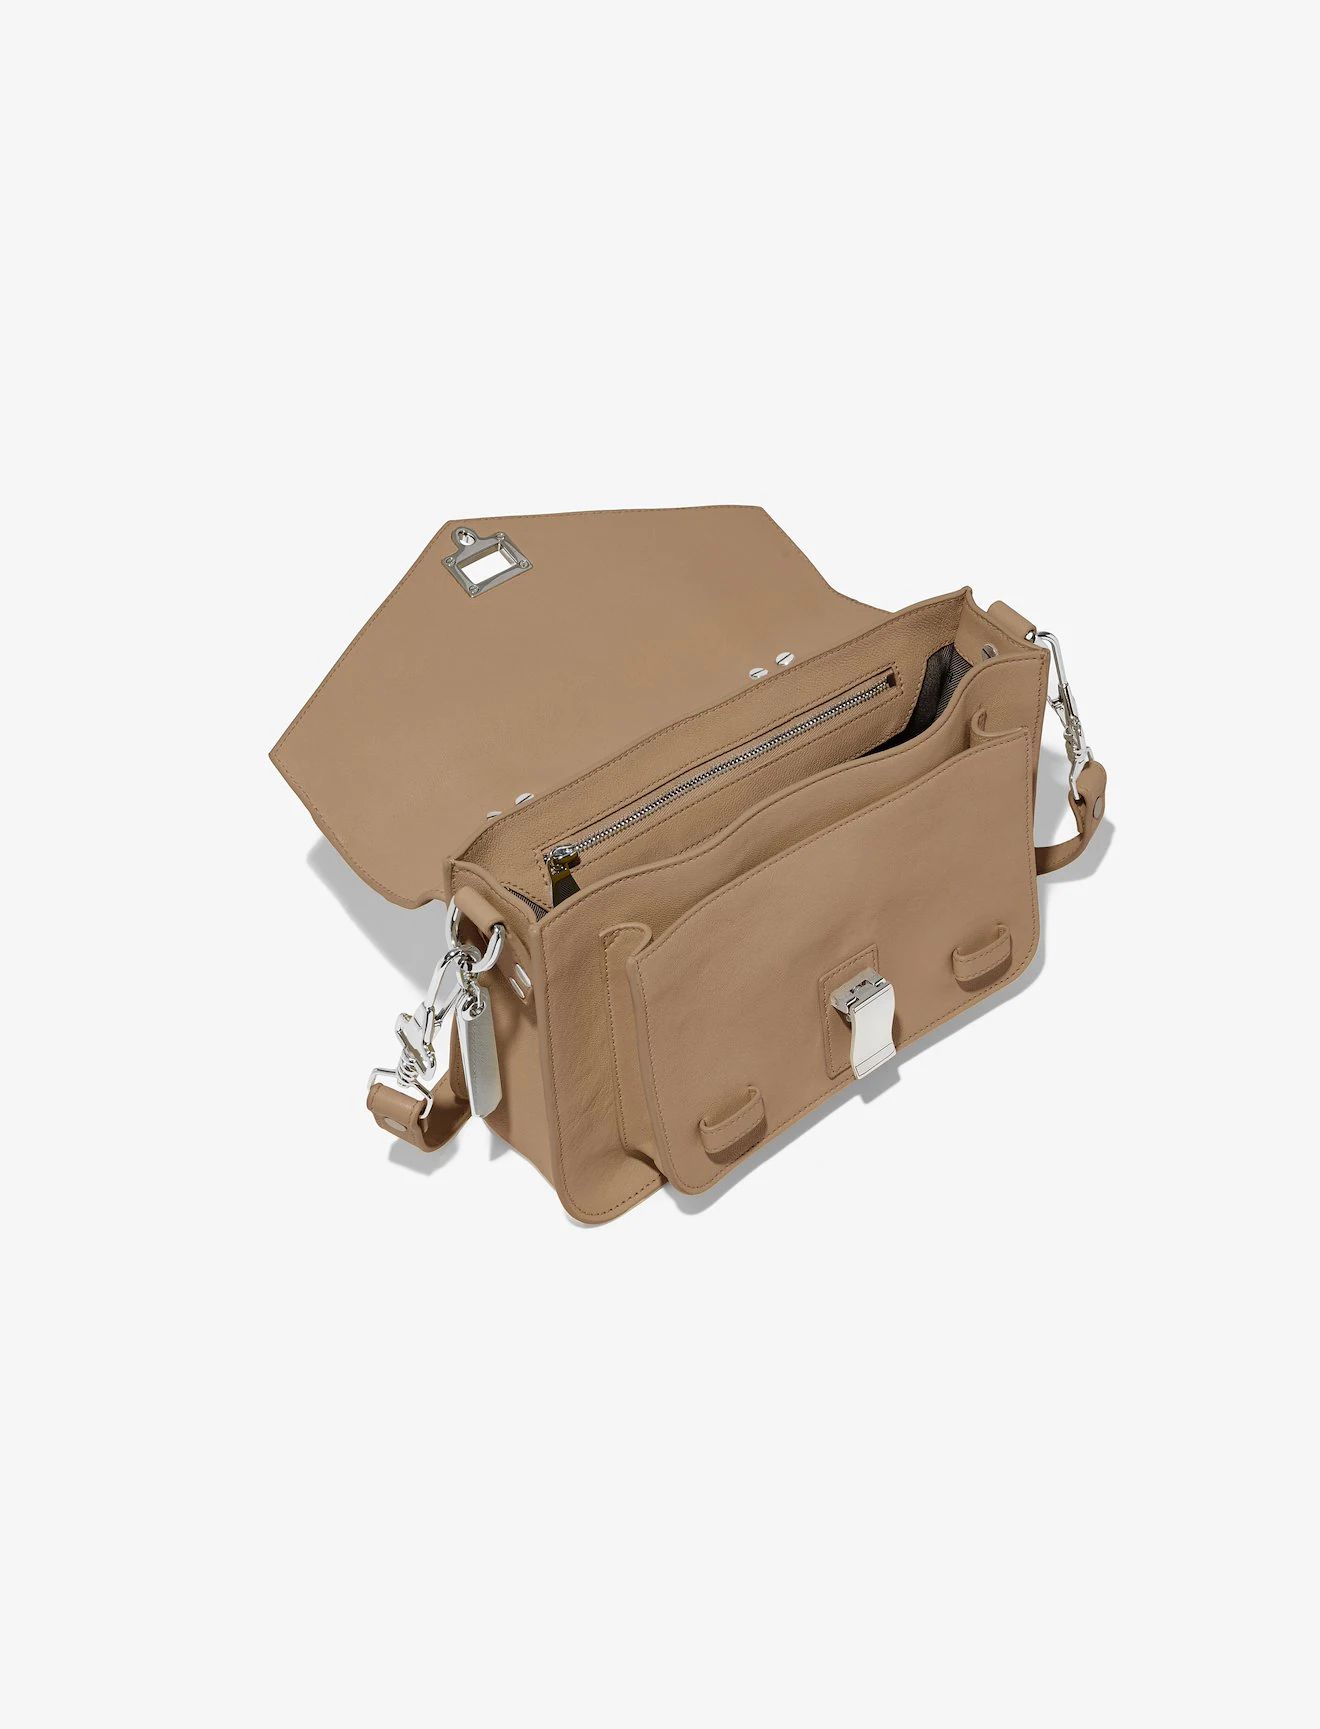 PS1 Tiny Bag in 2078 light taupe | Proenza Schouler | Proenza Schouler LLC